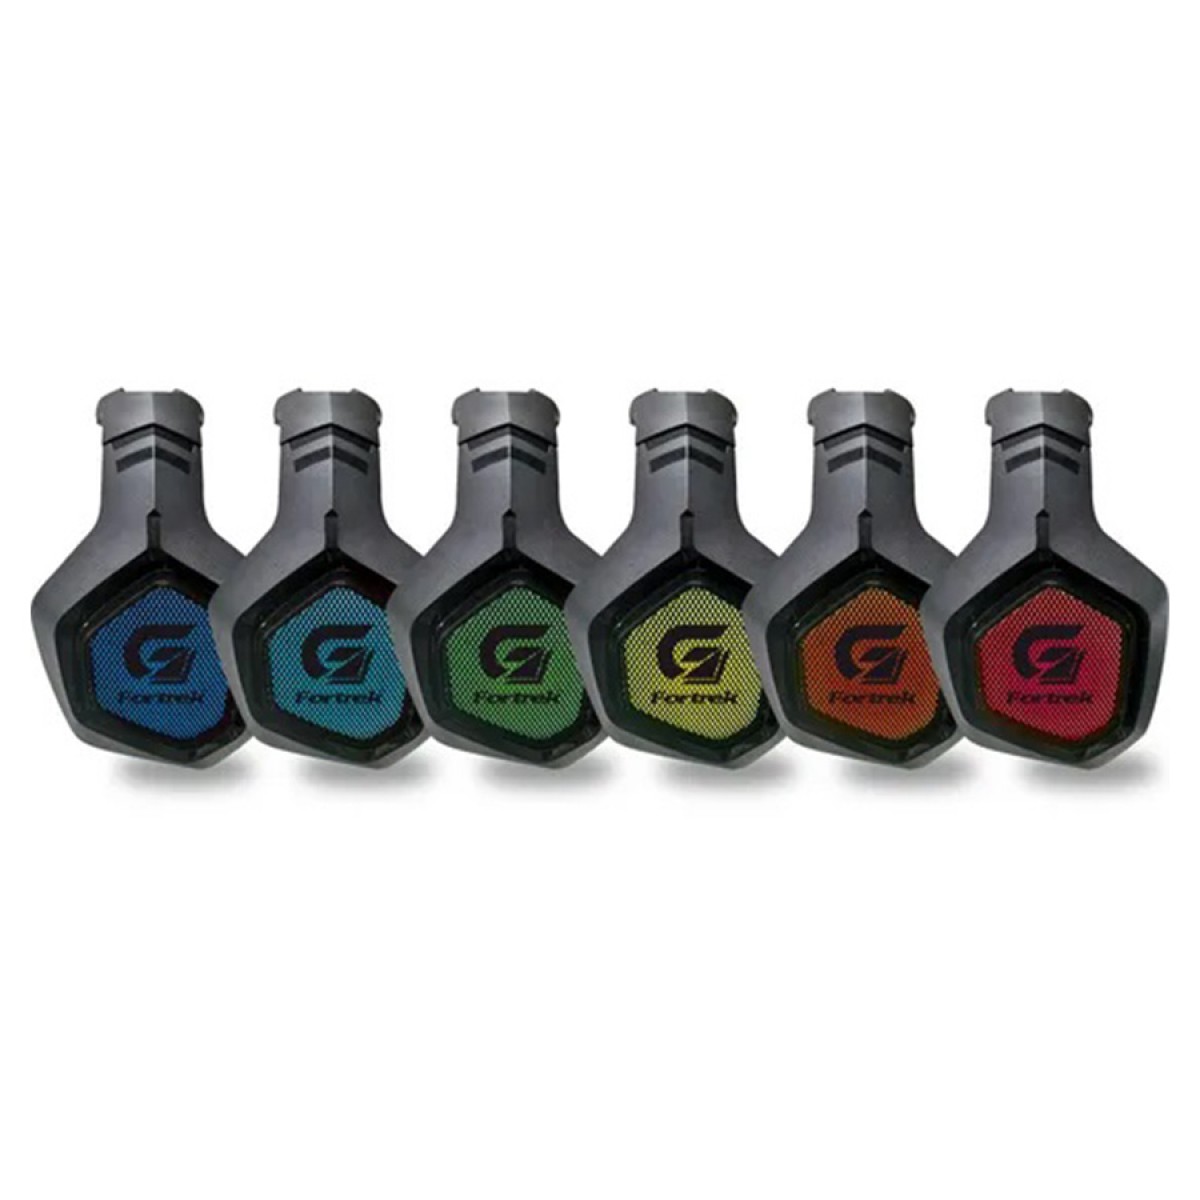 Headset Gamer Fortrek G Black Hawk, RGB, Drivers 50mm, Black, 70530